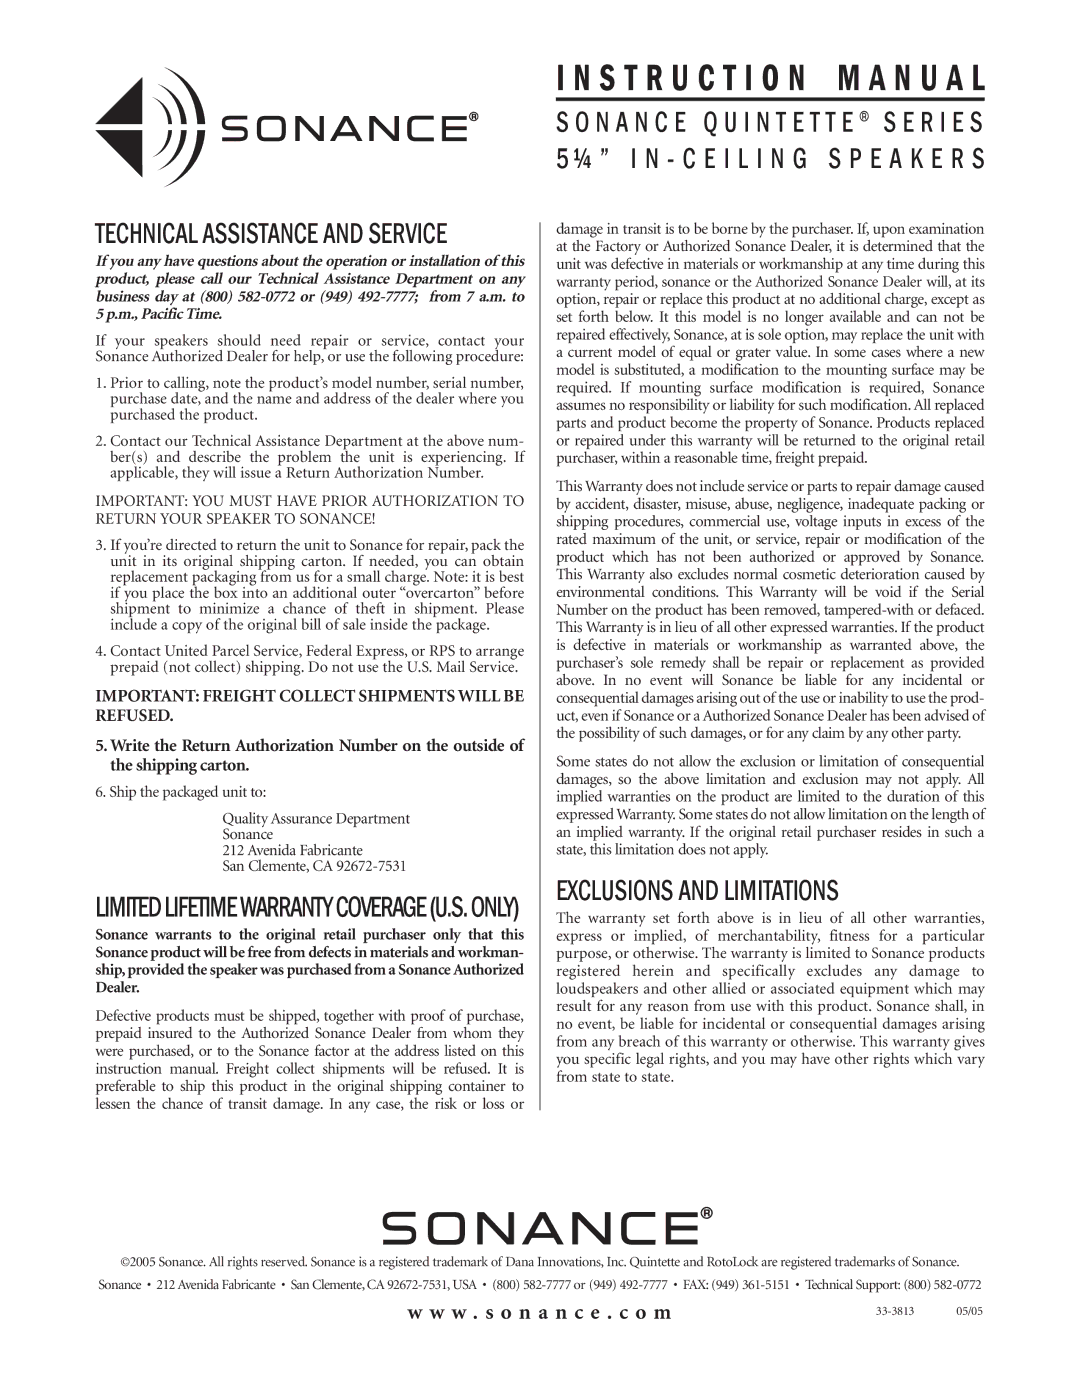 Sonance Quintette 521QR, Quintette 522QR instruction manual Technical Assistance and Service, Exclusions and Limitations 